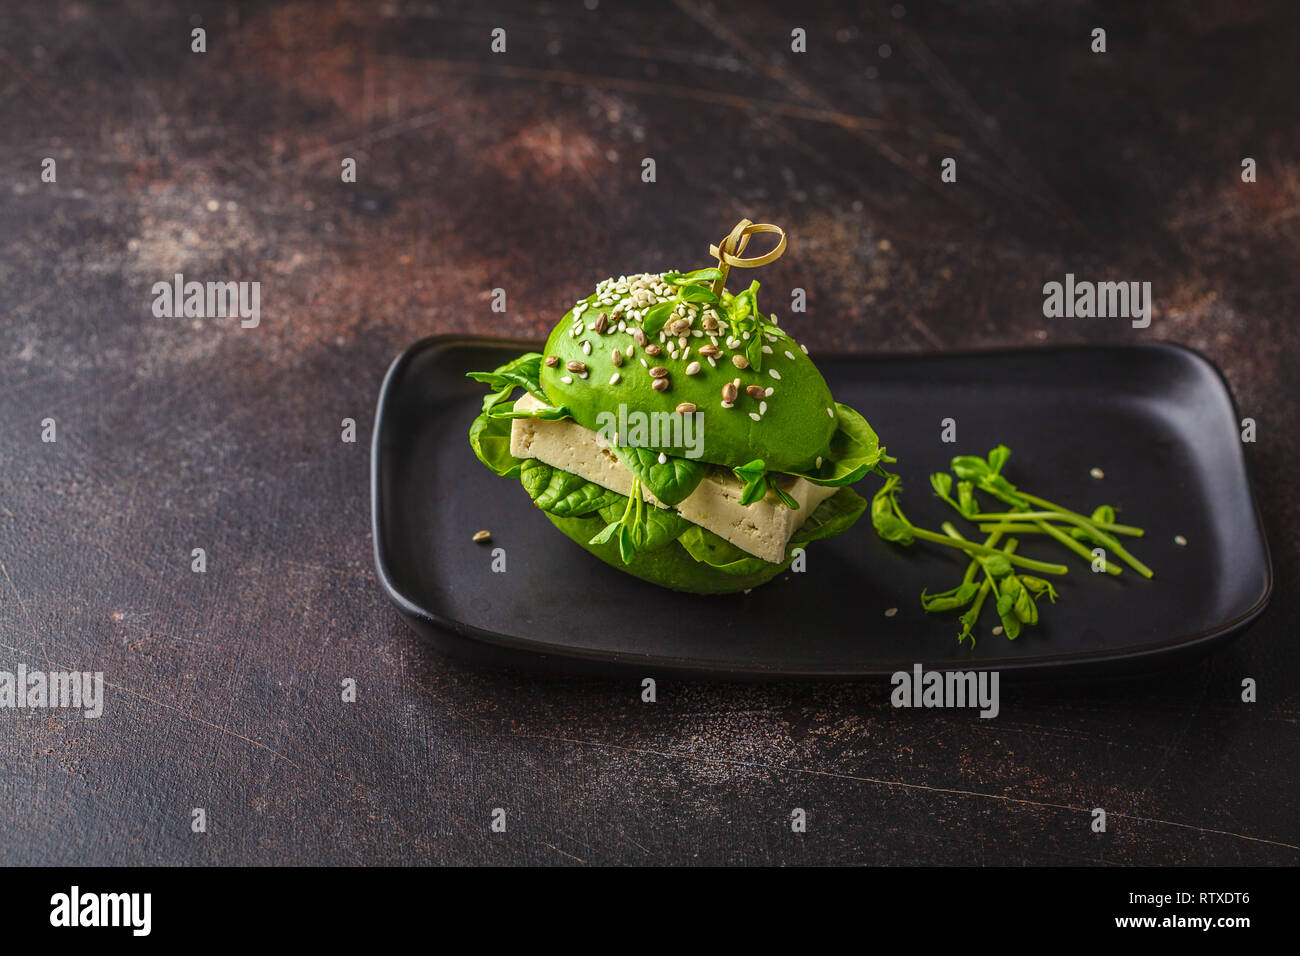 Vegan avocado tofu burger on black dish, dark background. Healthy detox food, plant based food concept. Stock Photo